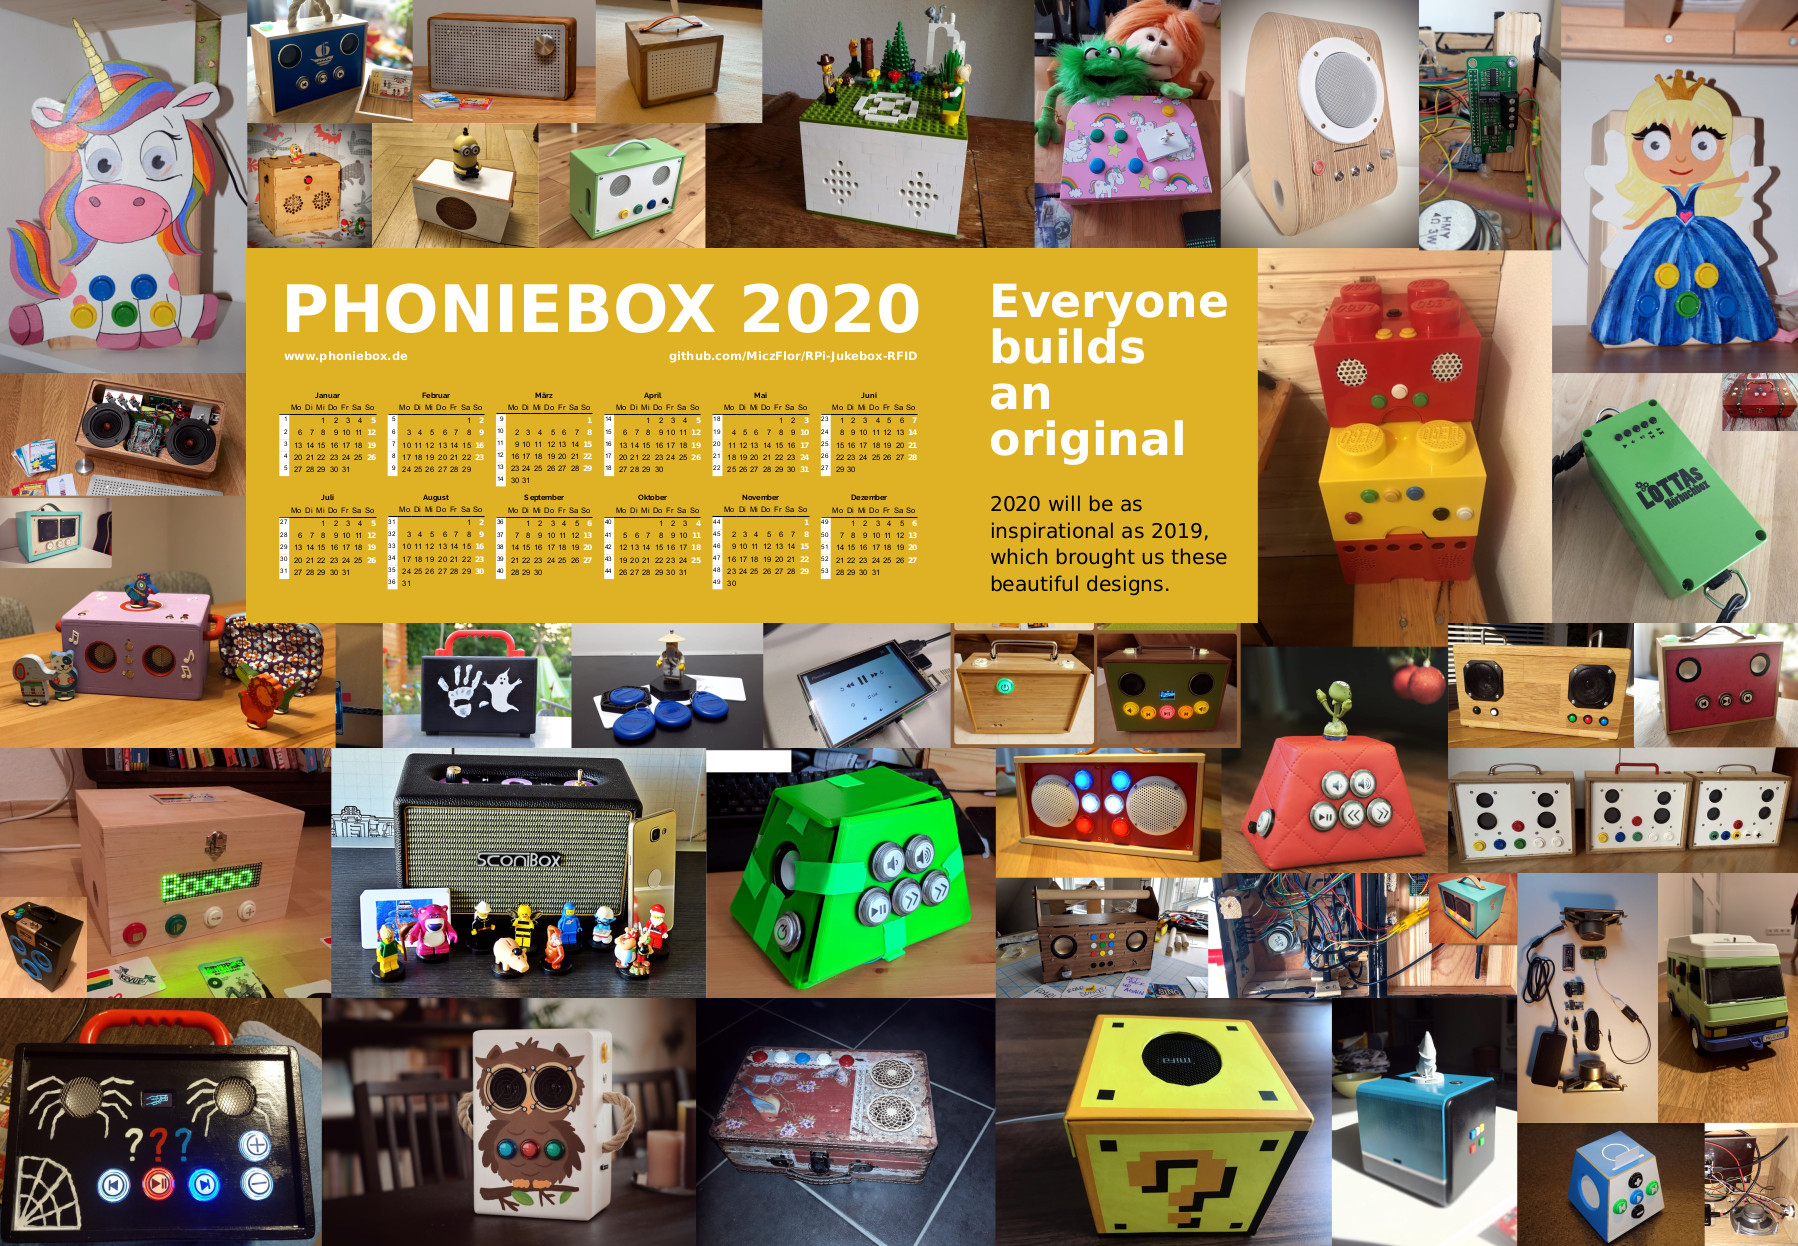 The 2020 Phoniebox Calendar